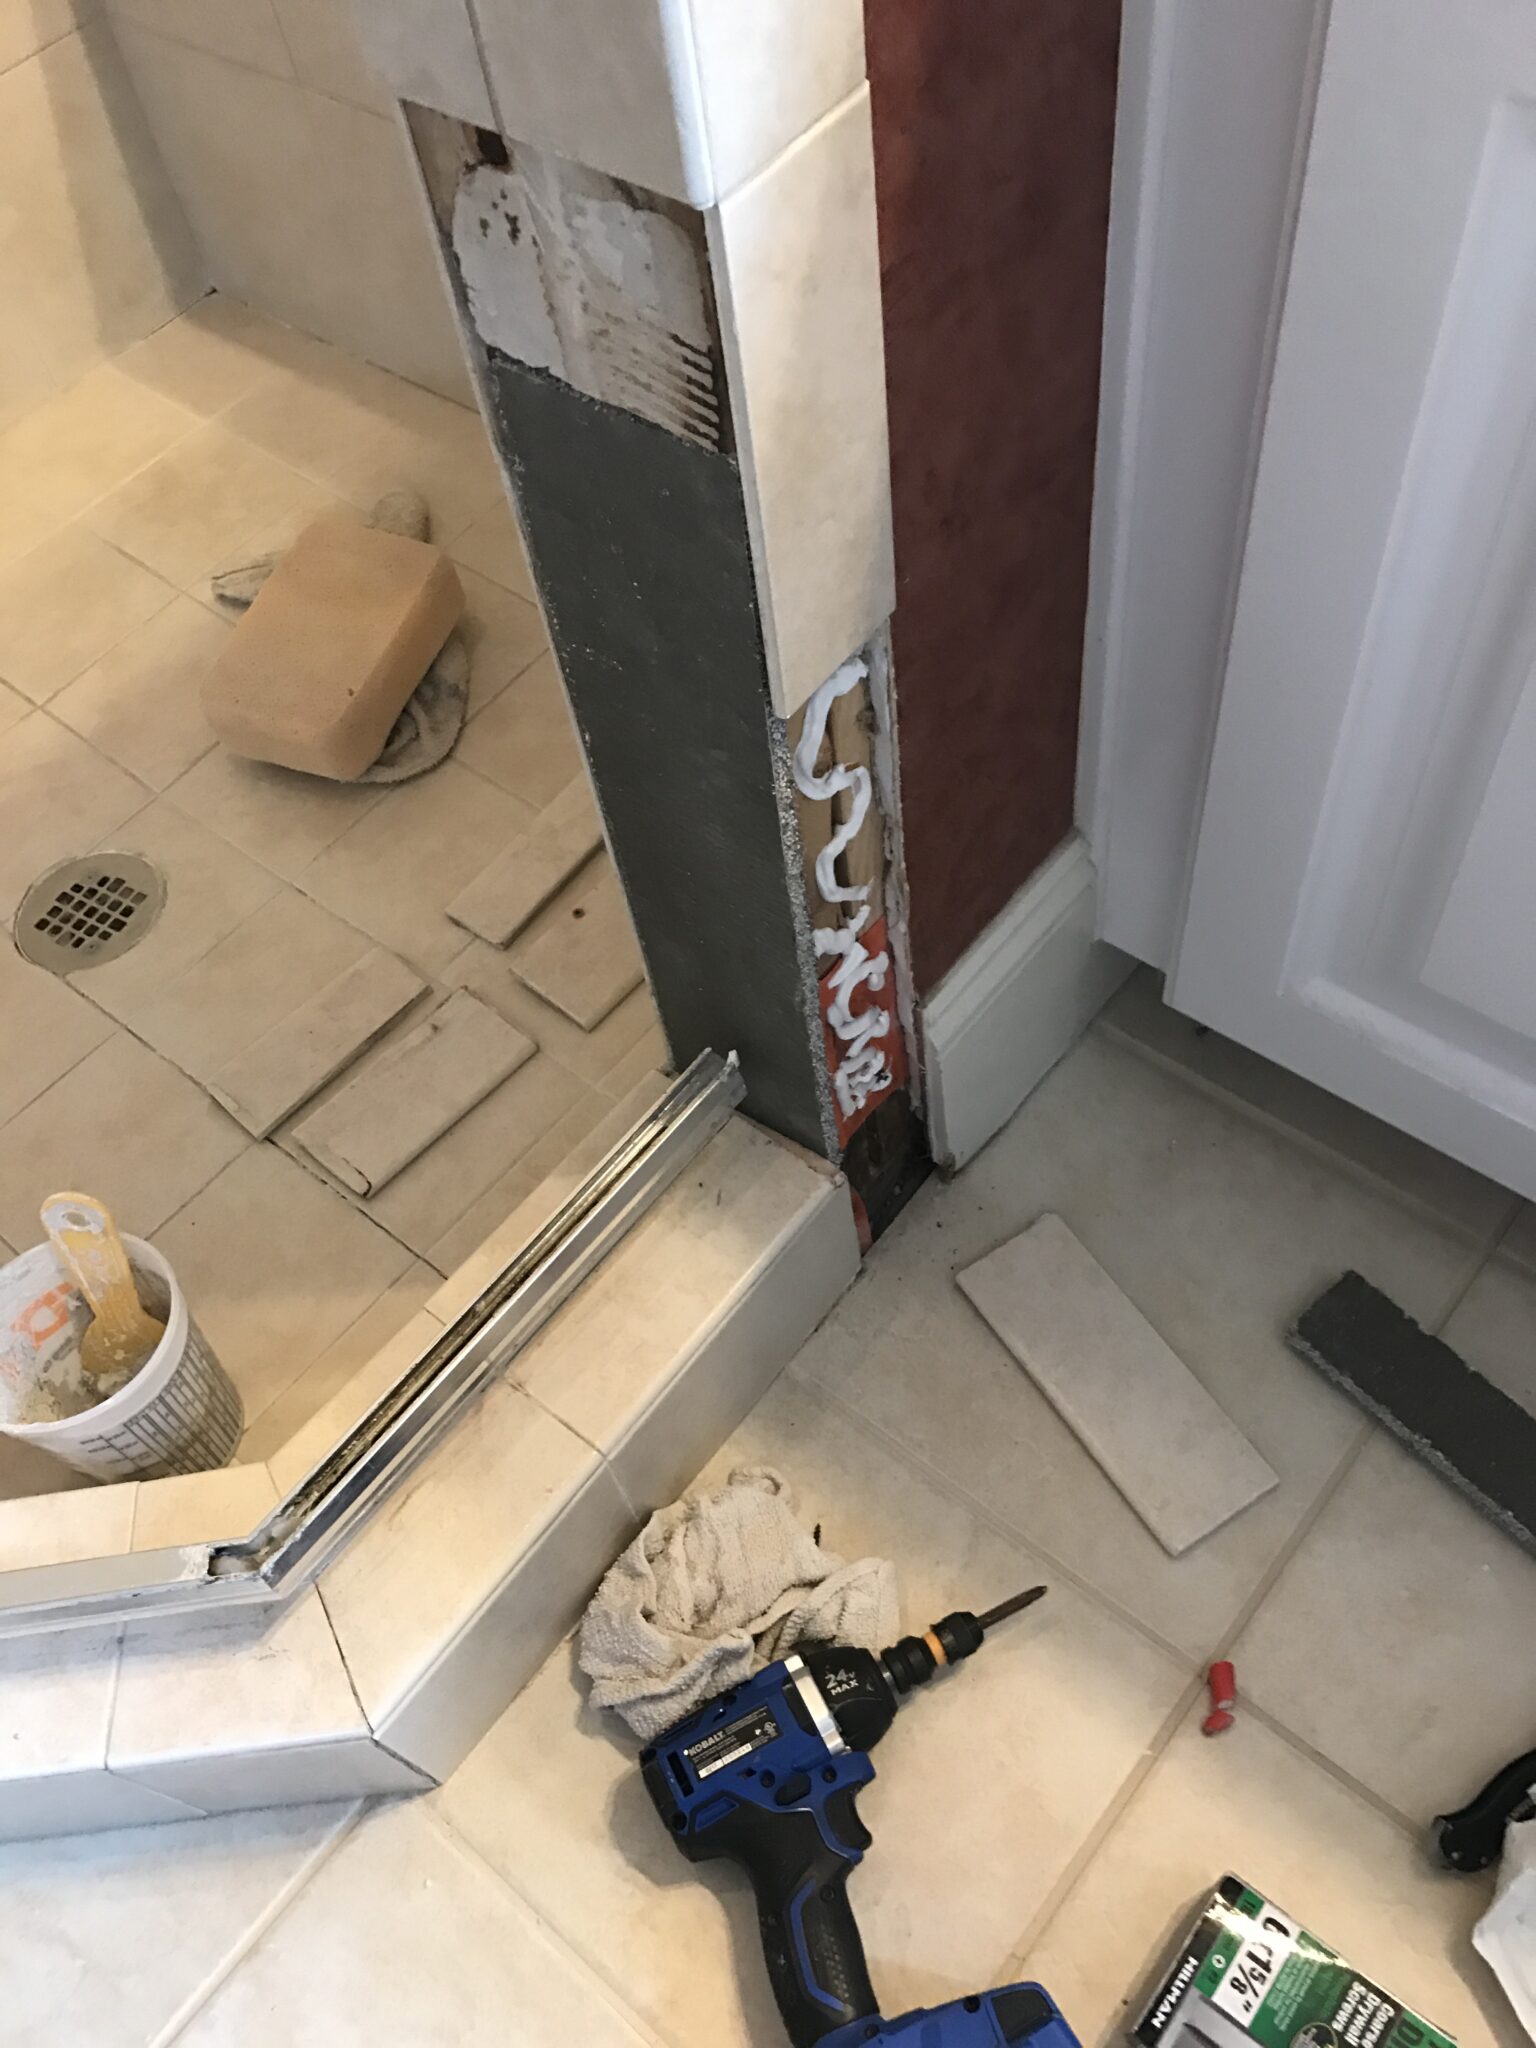 Demolition of leaking shower tile preparing for tile replacement